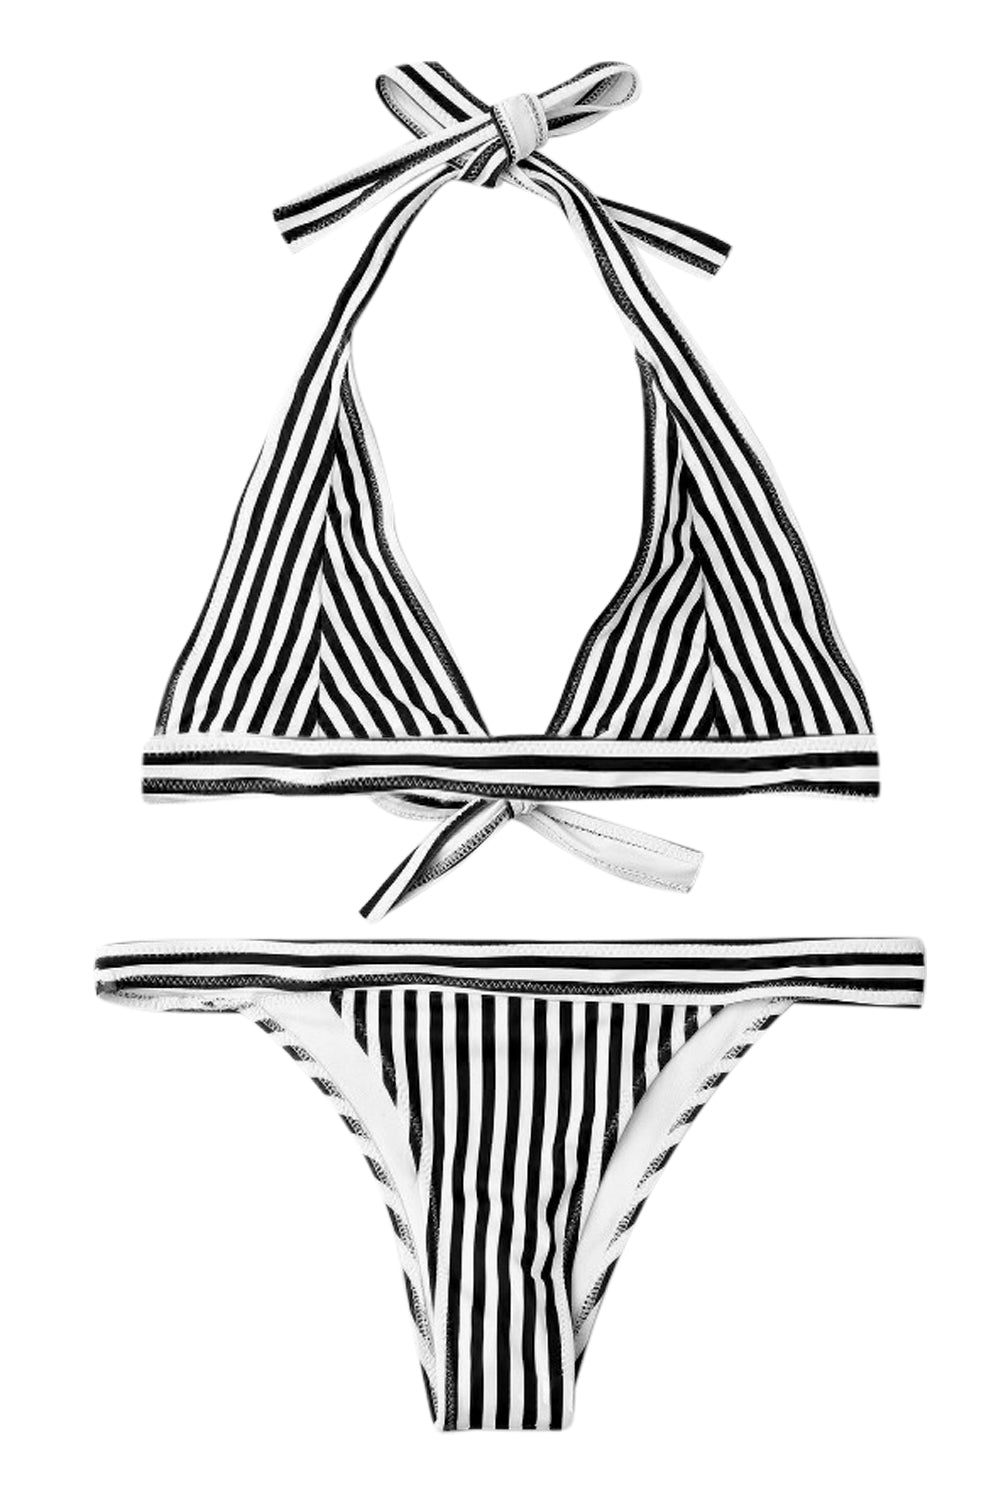 Iyasson Stripe  Printing Bikini Set